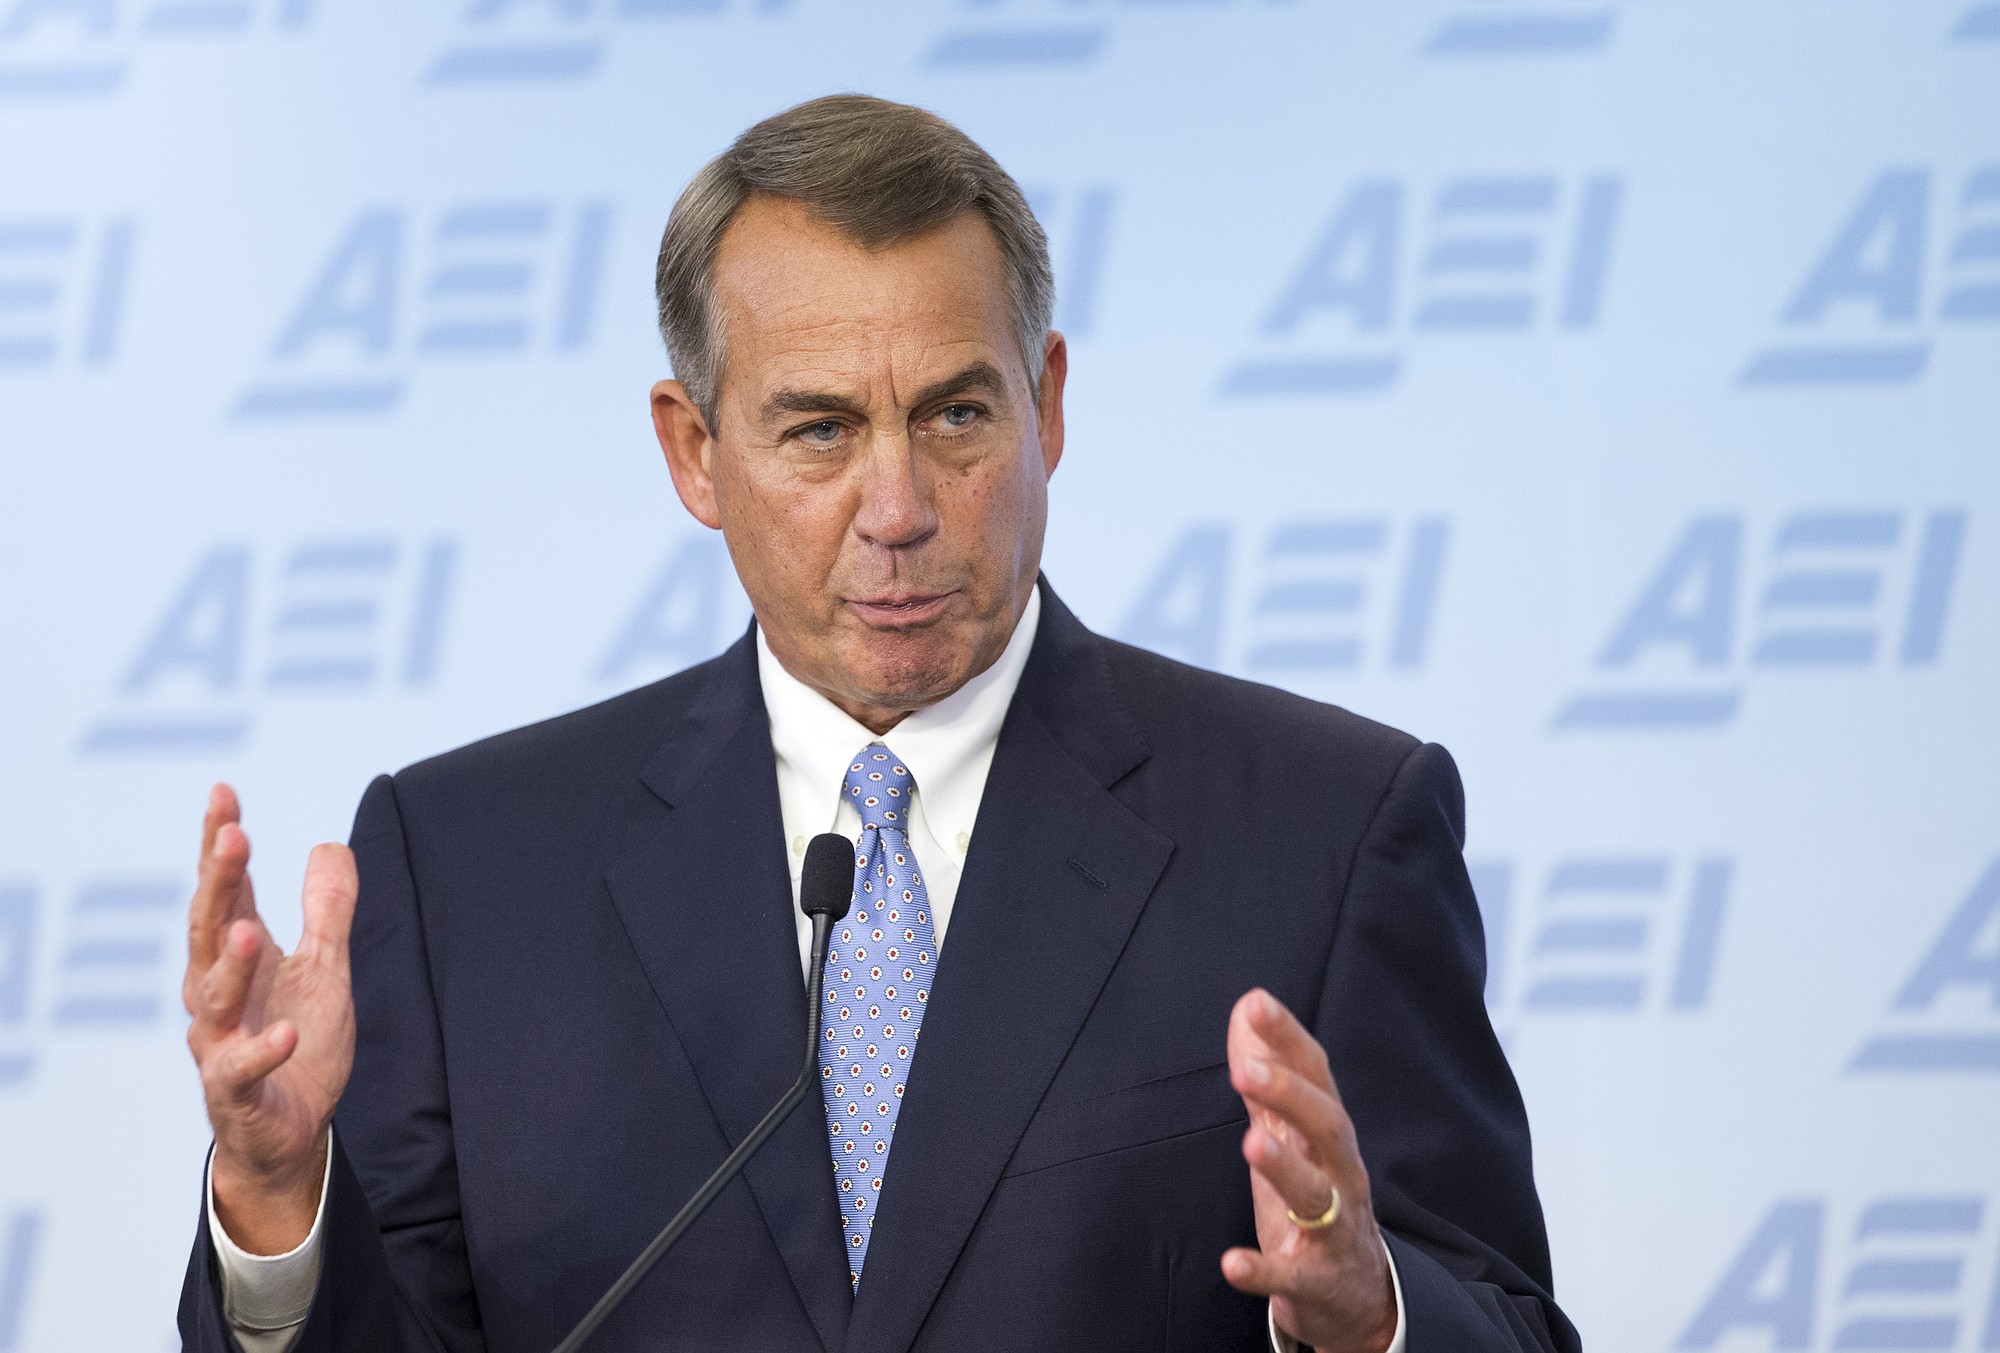 House Speaker John Boehner, R-Ohio, outlines his five-point long-term vision for resetting America's economic foundation during a speech in Washington on Thursday.